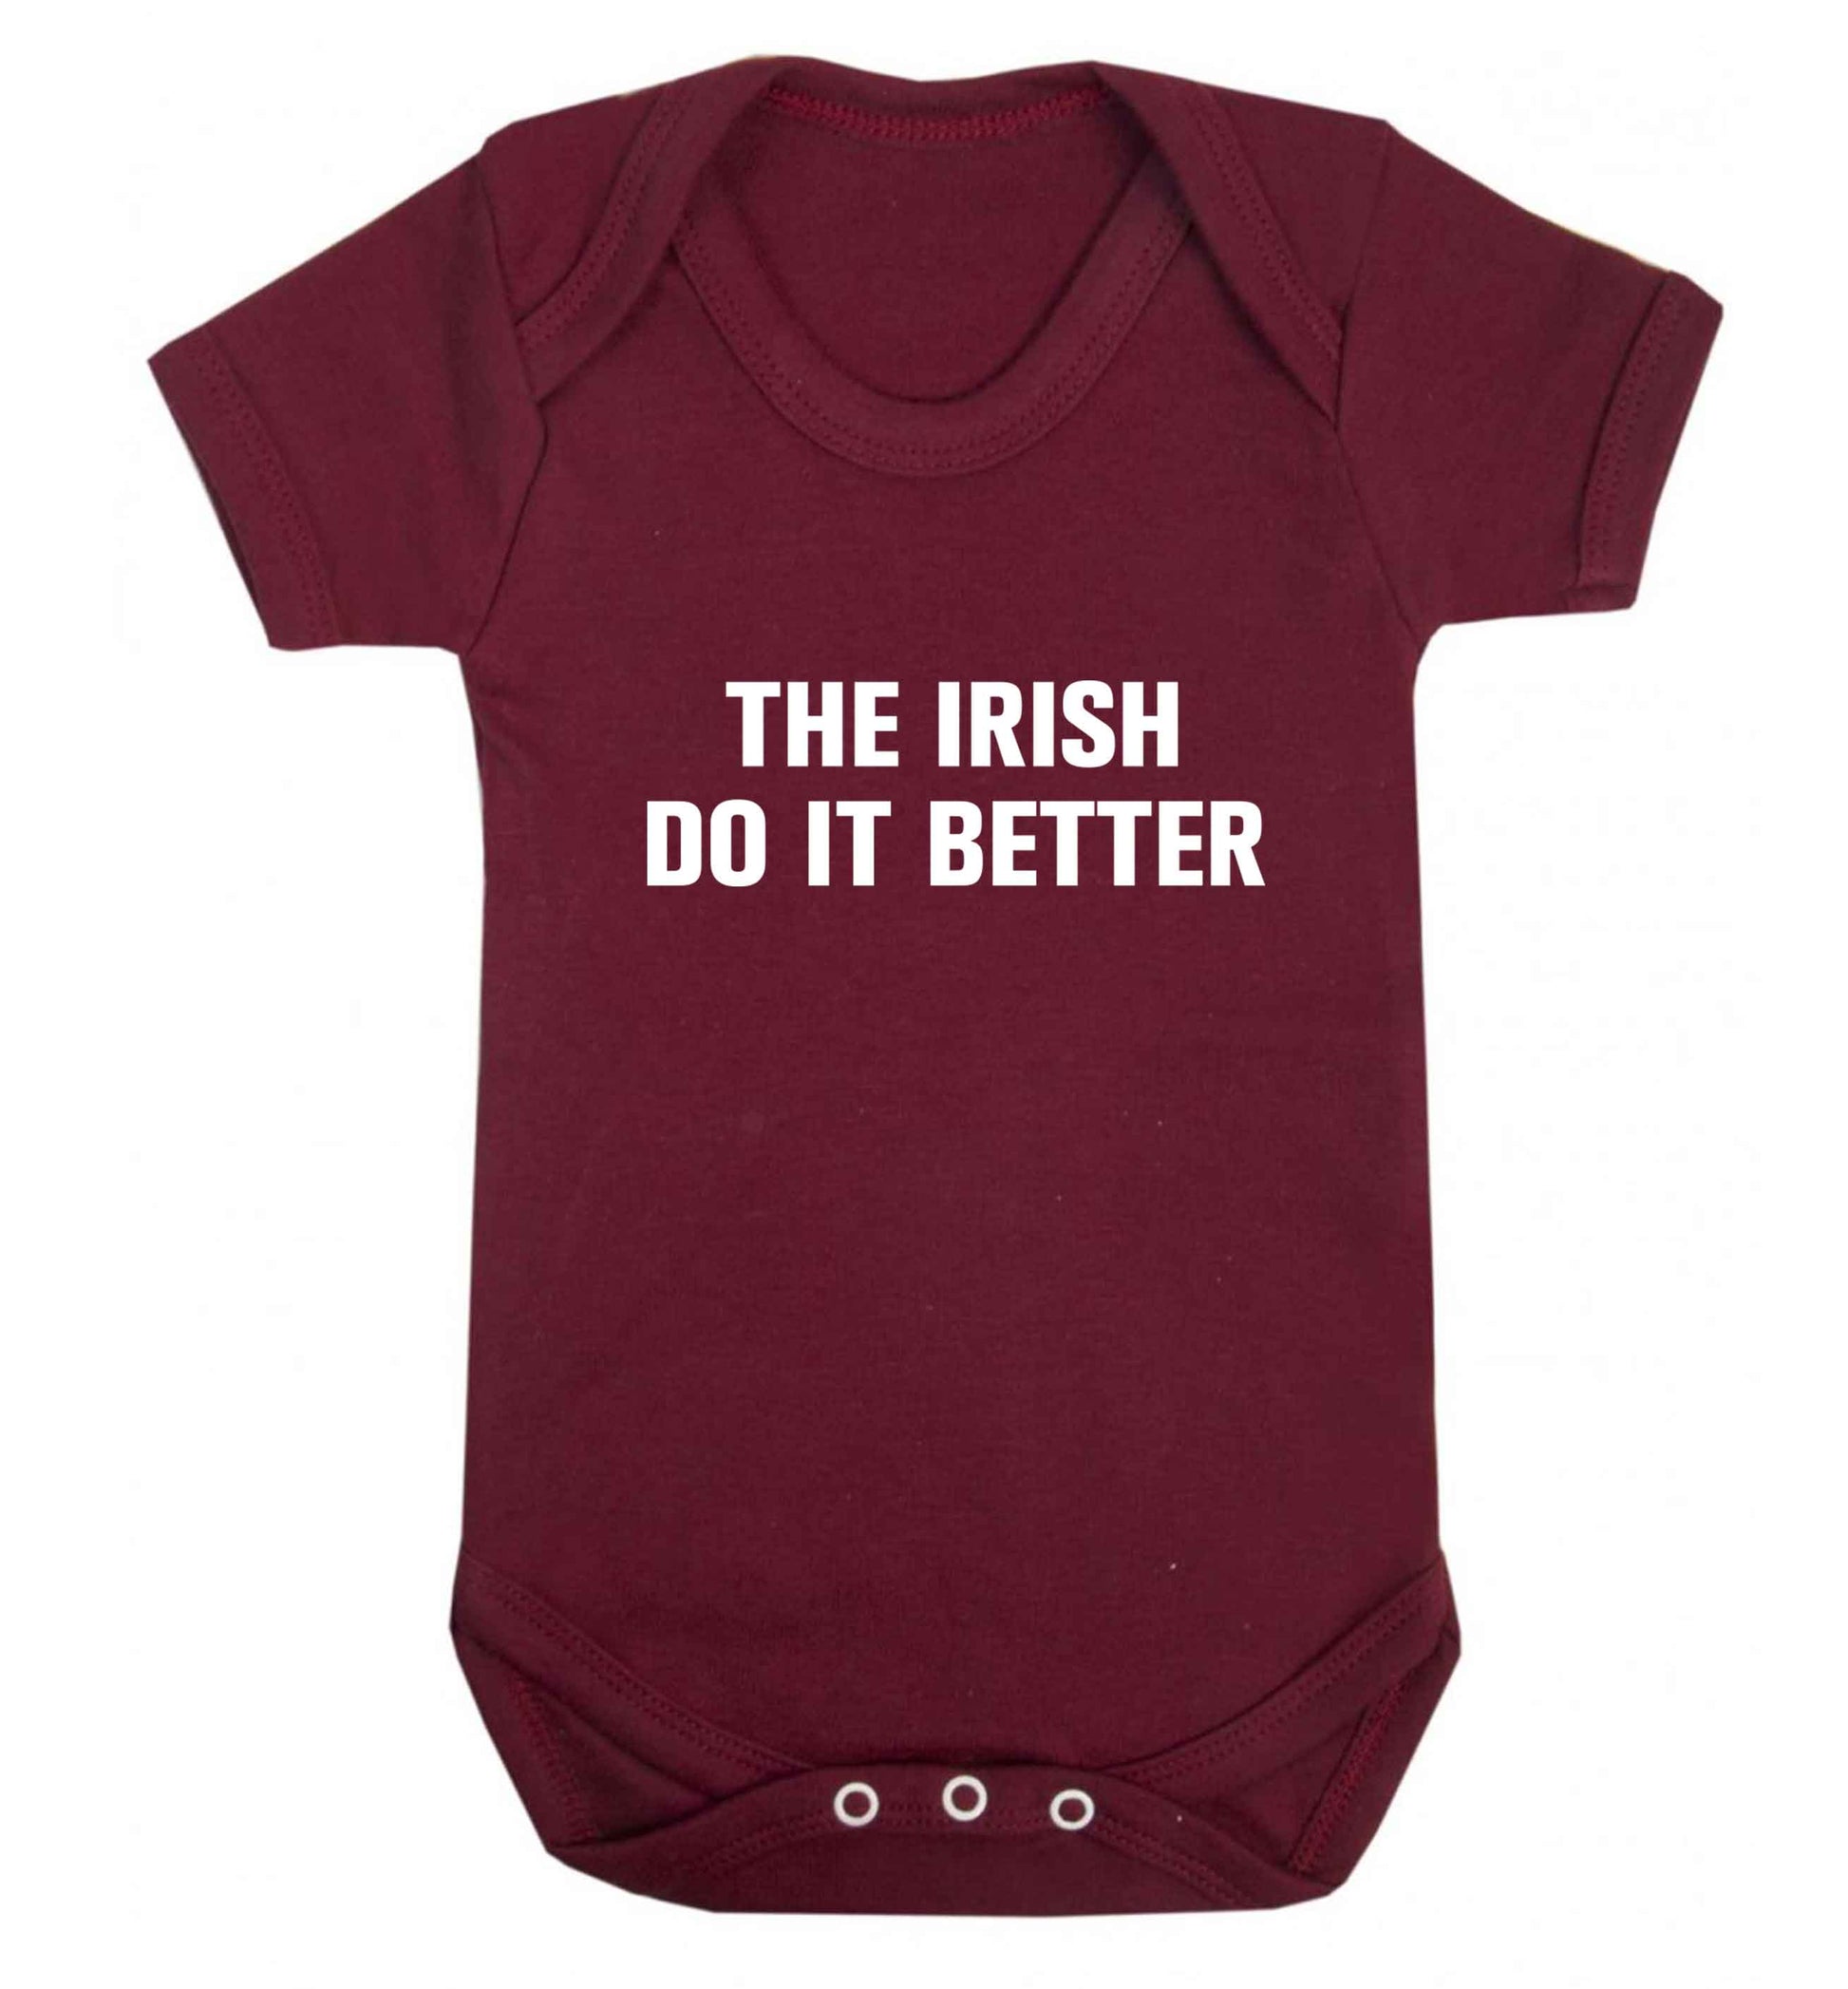 The Irish do it better baby vest maroon 18-24 months